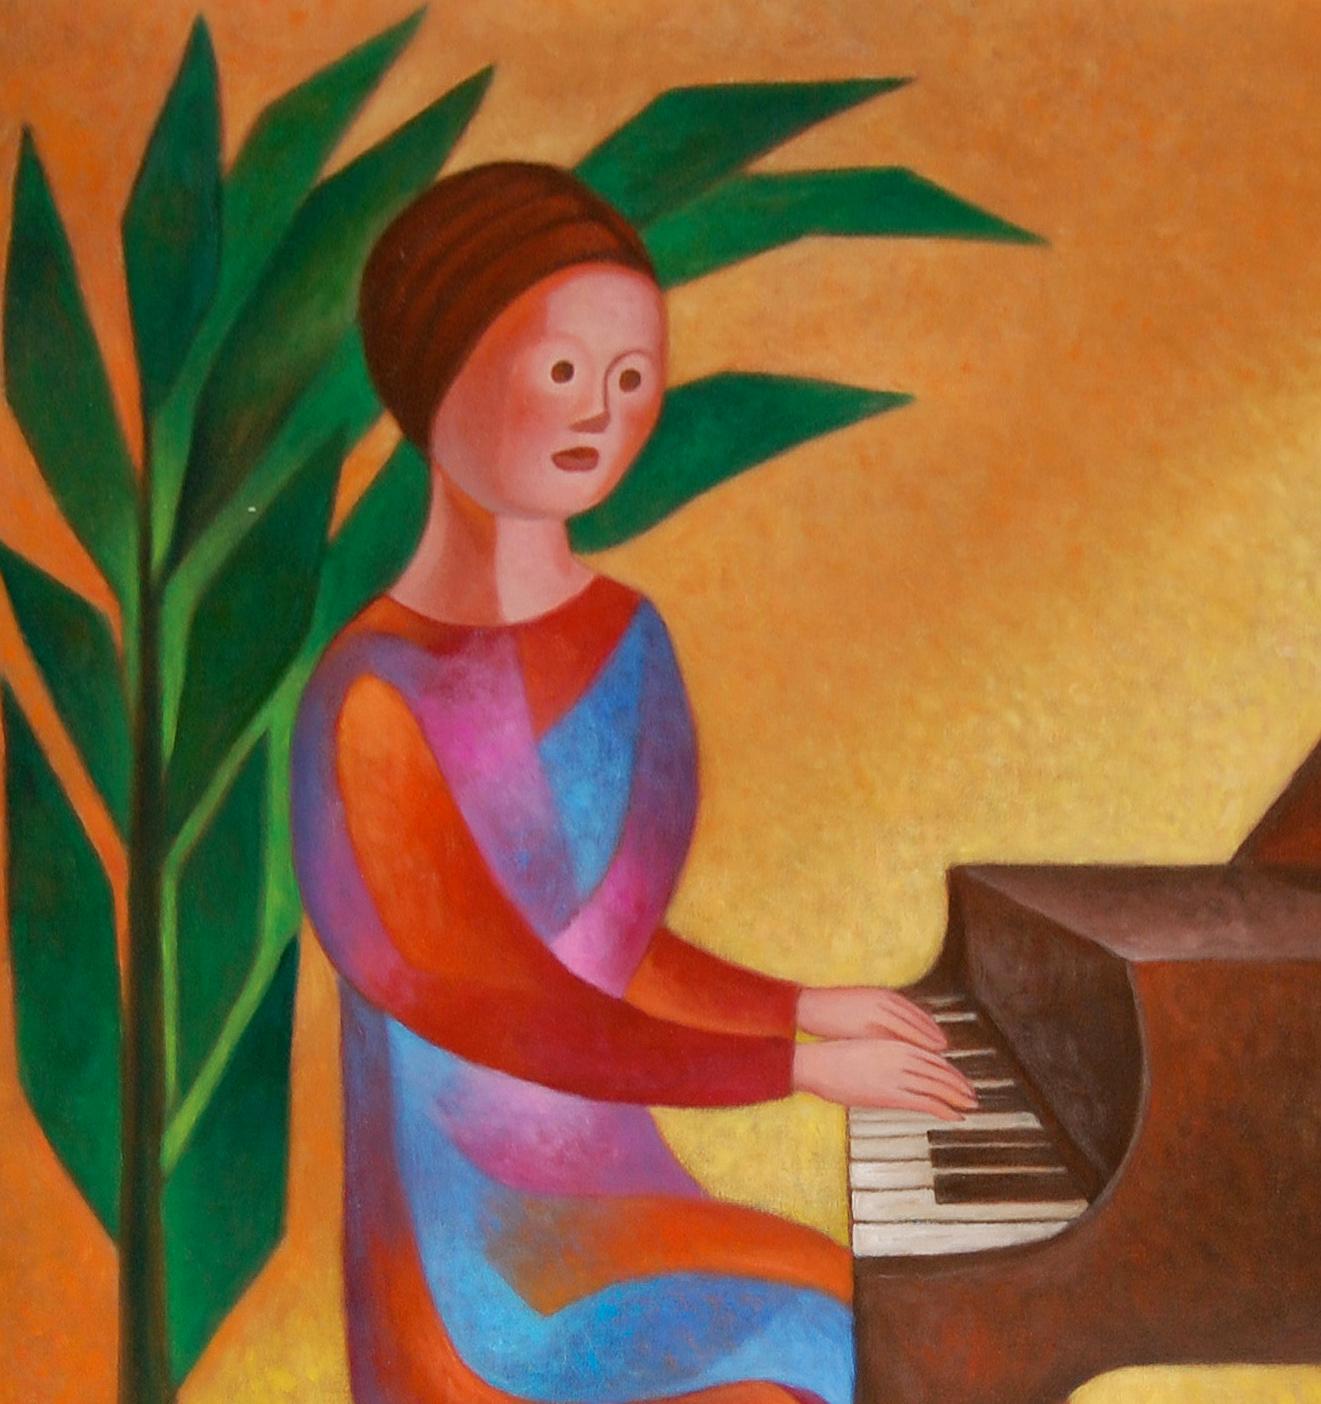 Tocando Piano - Painting by Carlos Orduña